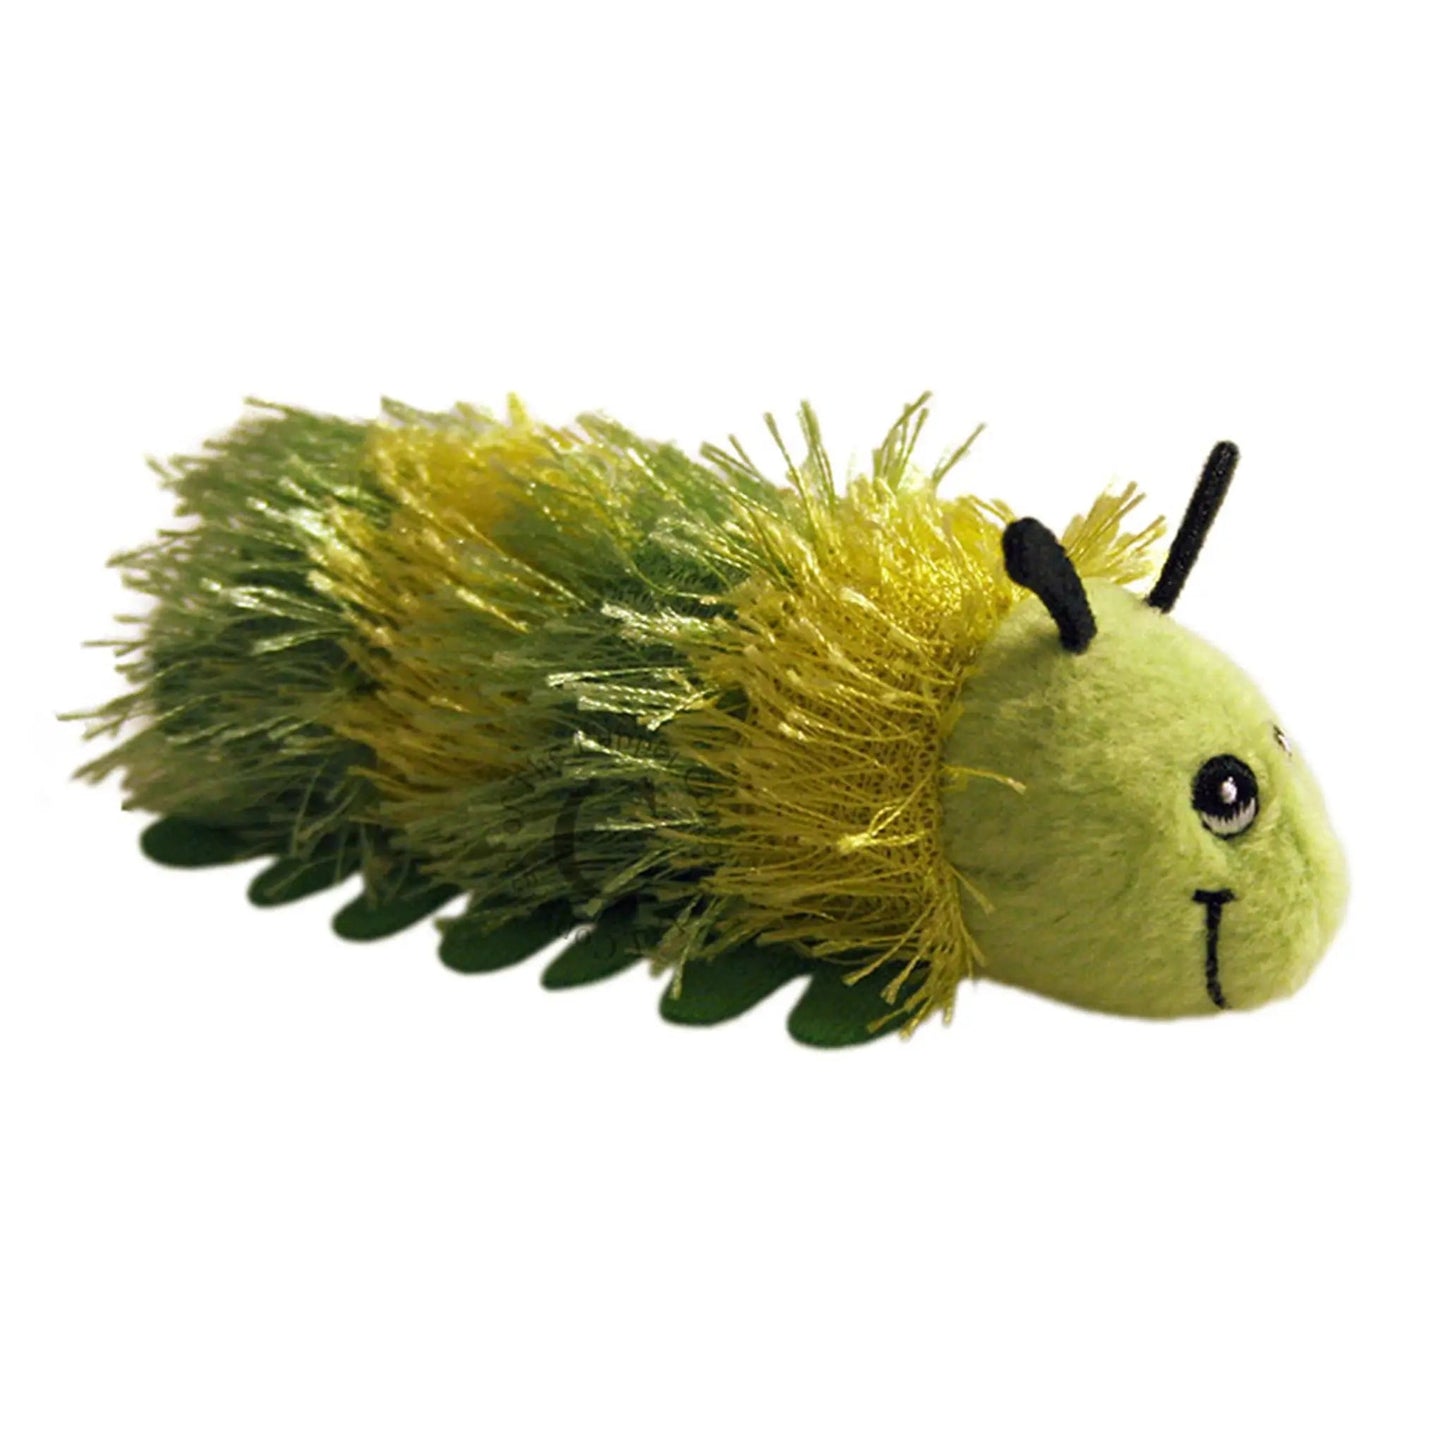 Caterpillar (Green) Finger Puppet - The Puppet Company - The Forgotten Toy Shop